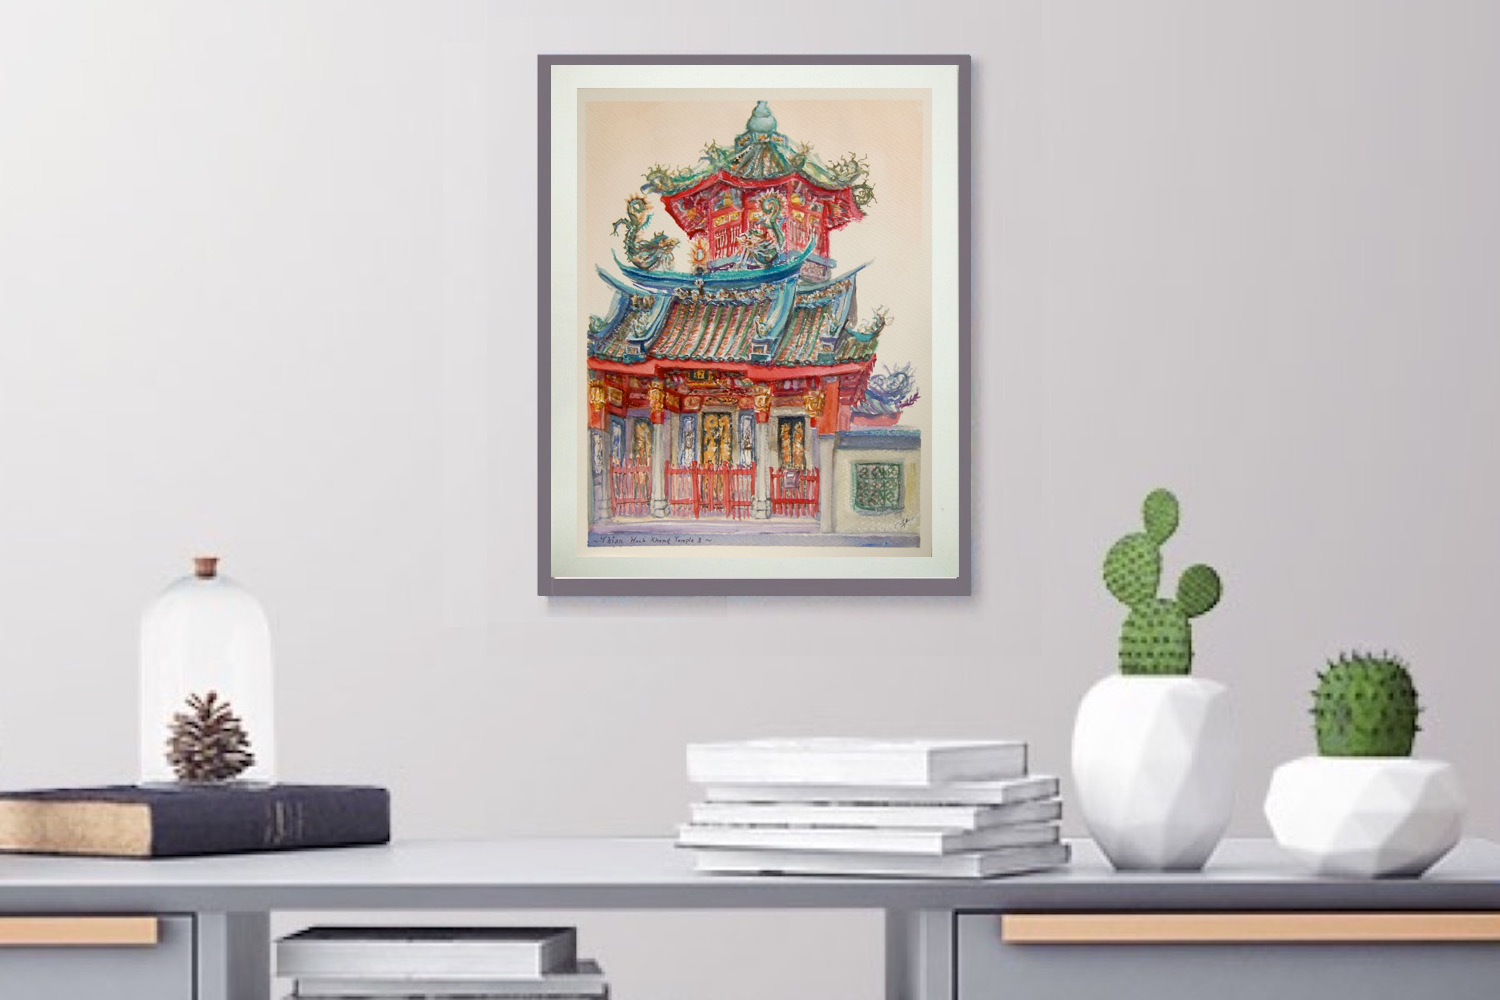 Singapore Chinese Temple Painting Art, Original Watercolor, Architectural Building, Historic, Heritage, Urban Sketcher, Plein Air, City Art